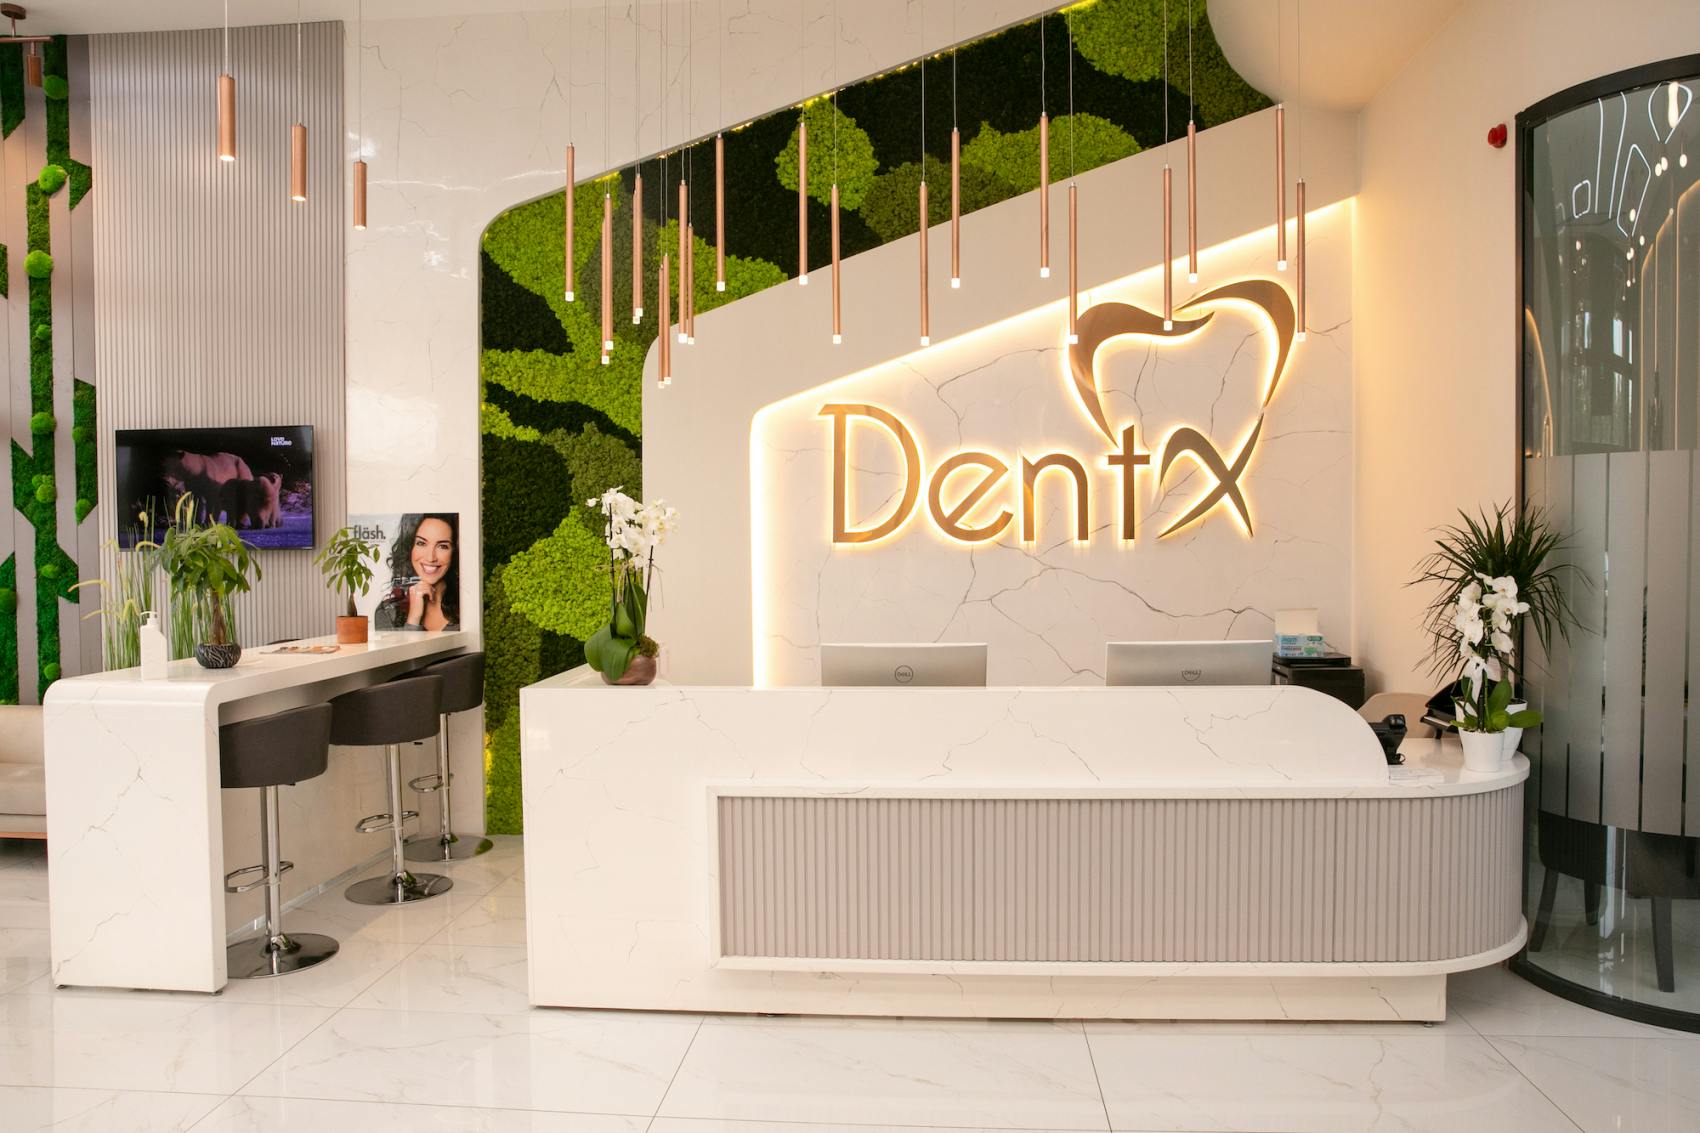 Reception area of DentX Dental Clinic